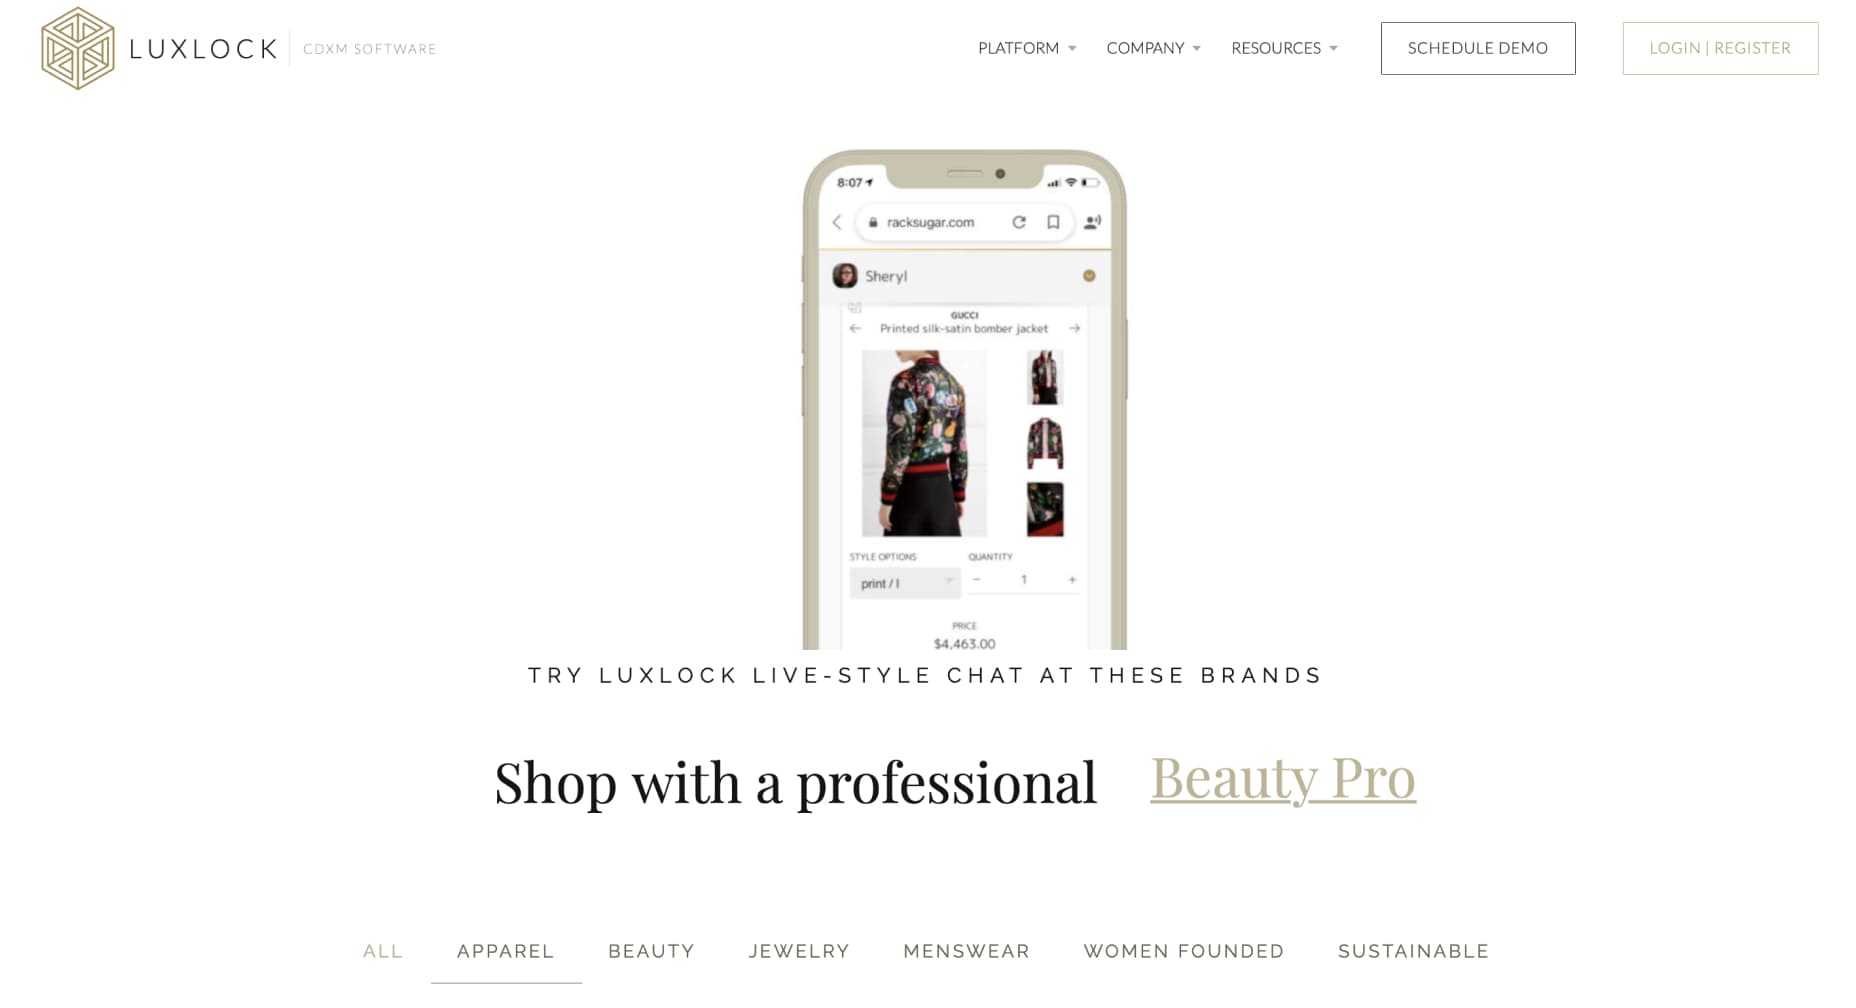 Luxlock retail customer experience management platform